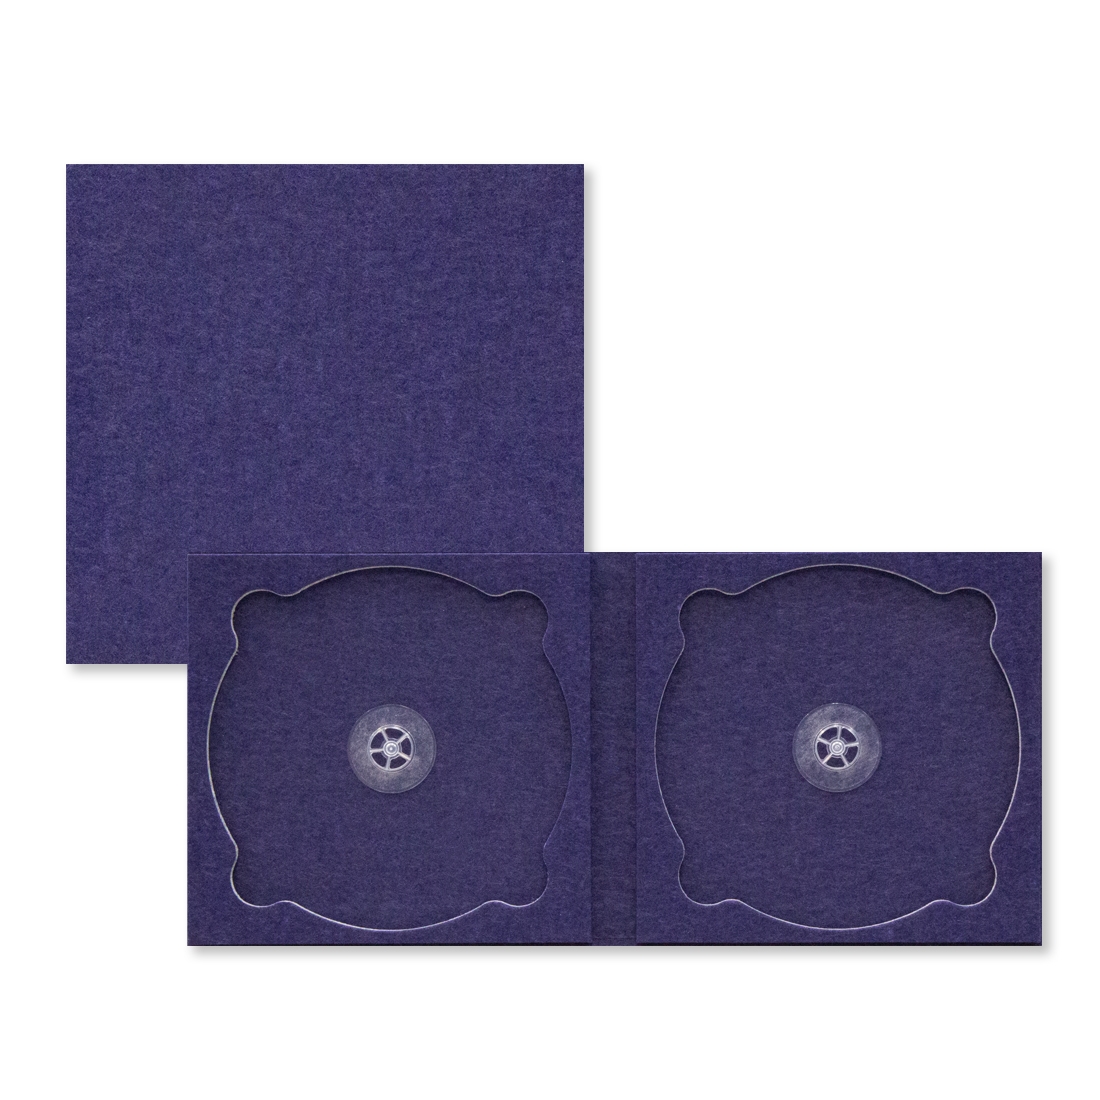 CDケース,discami,美濃和紙,紫,2枚収納